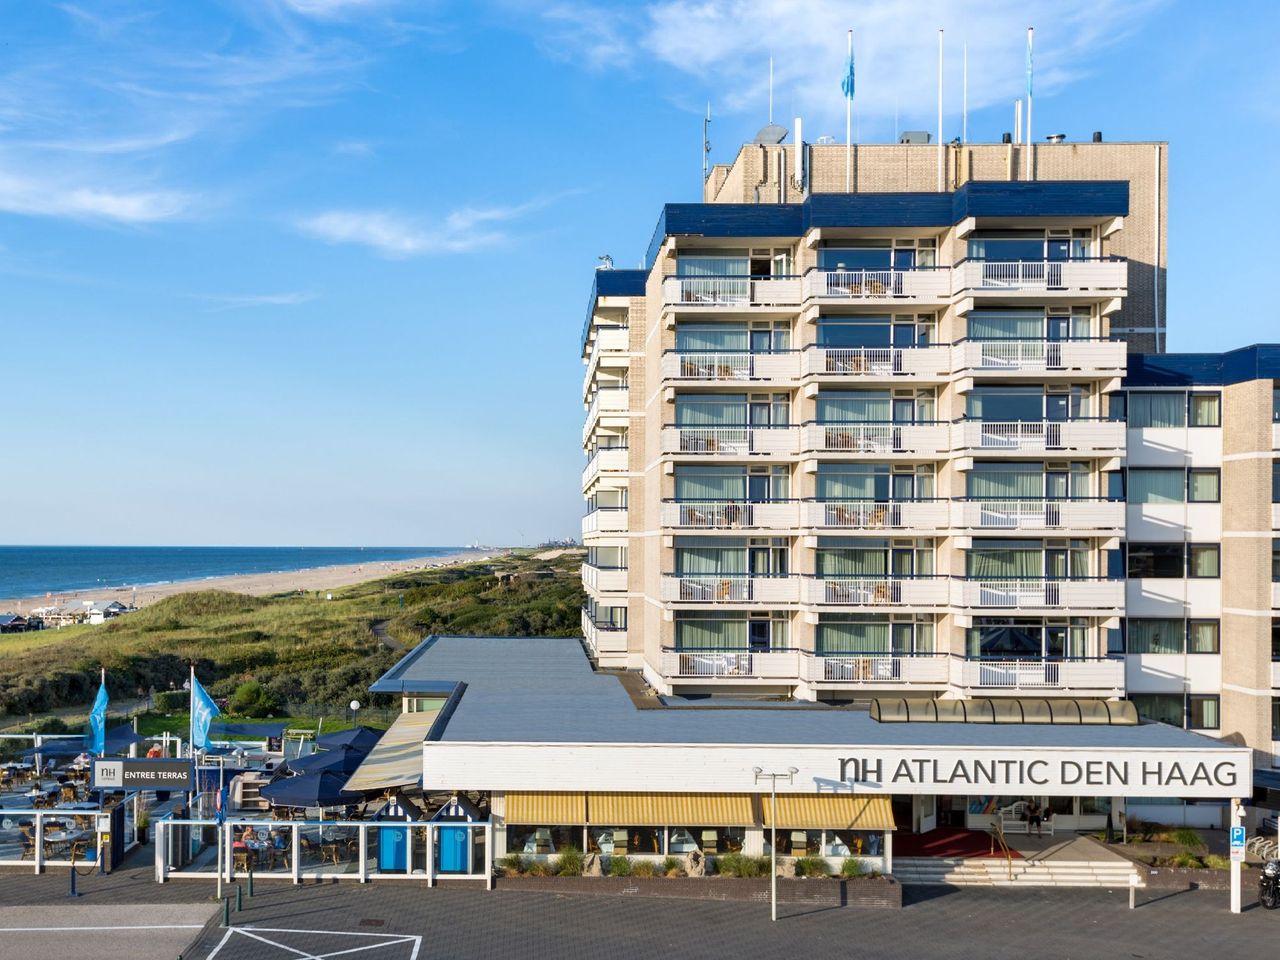 4 Tage im Hotel NH Atlantic Den Haag 